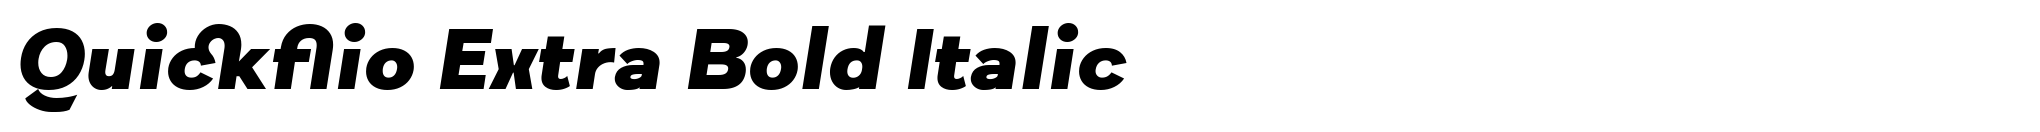 Quickflio Extra Bold Italic image